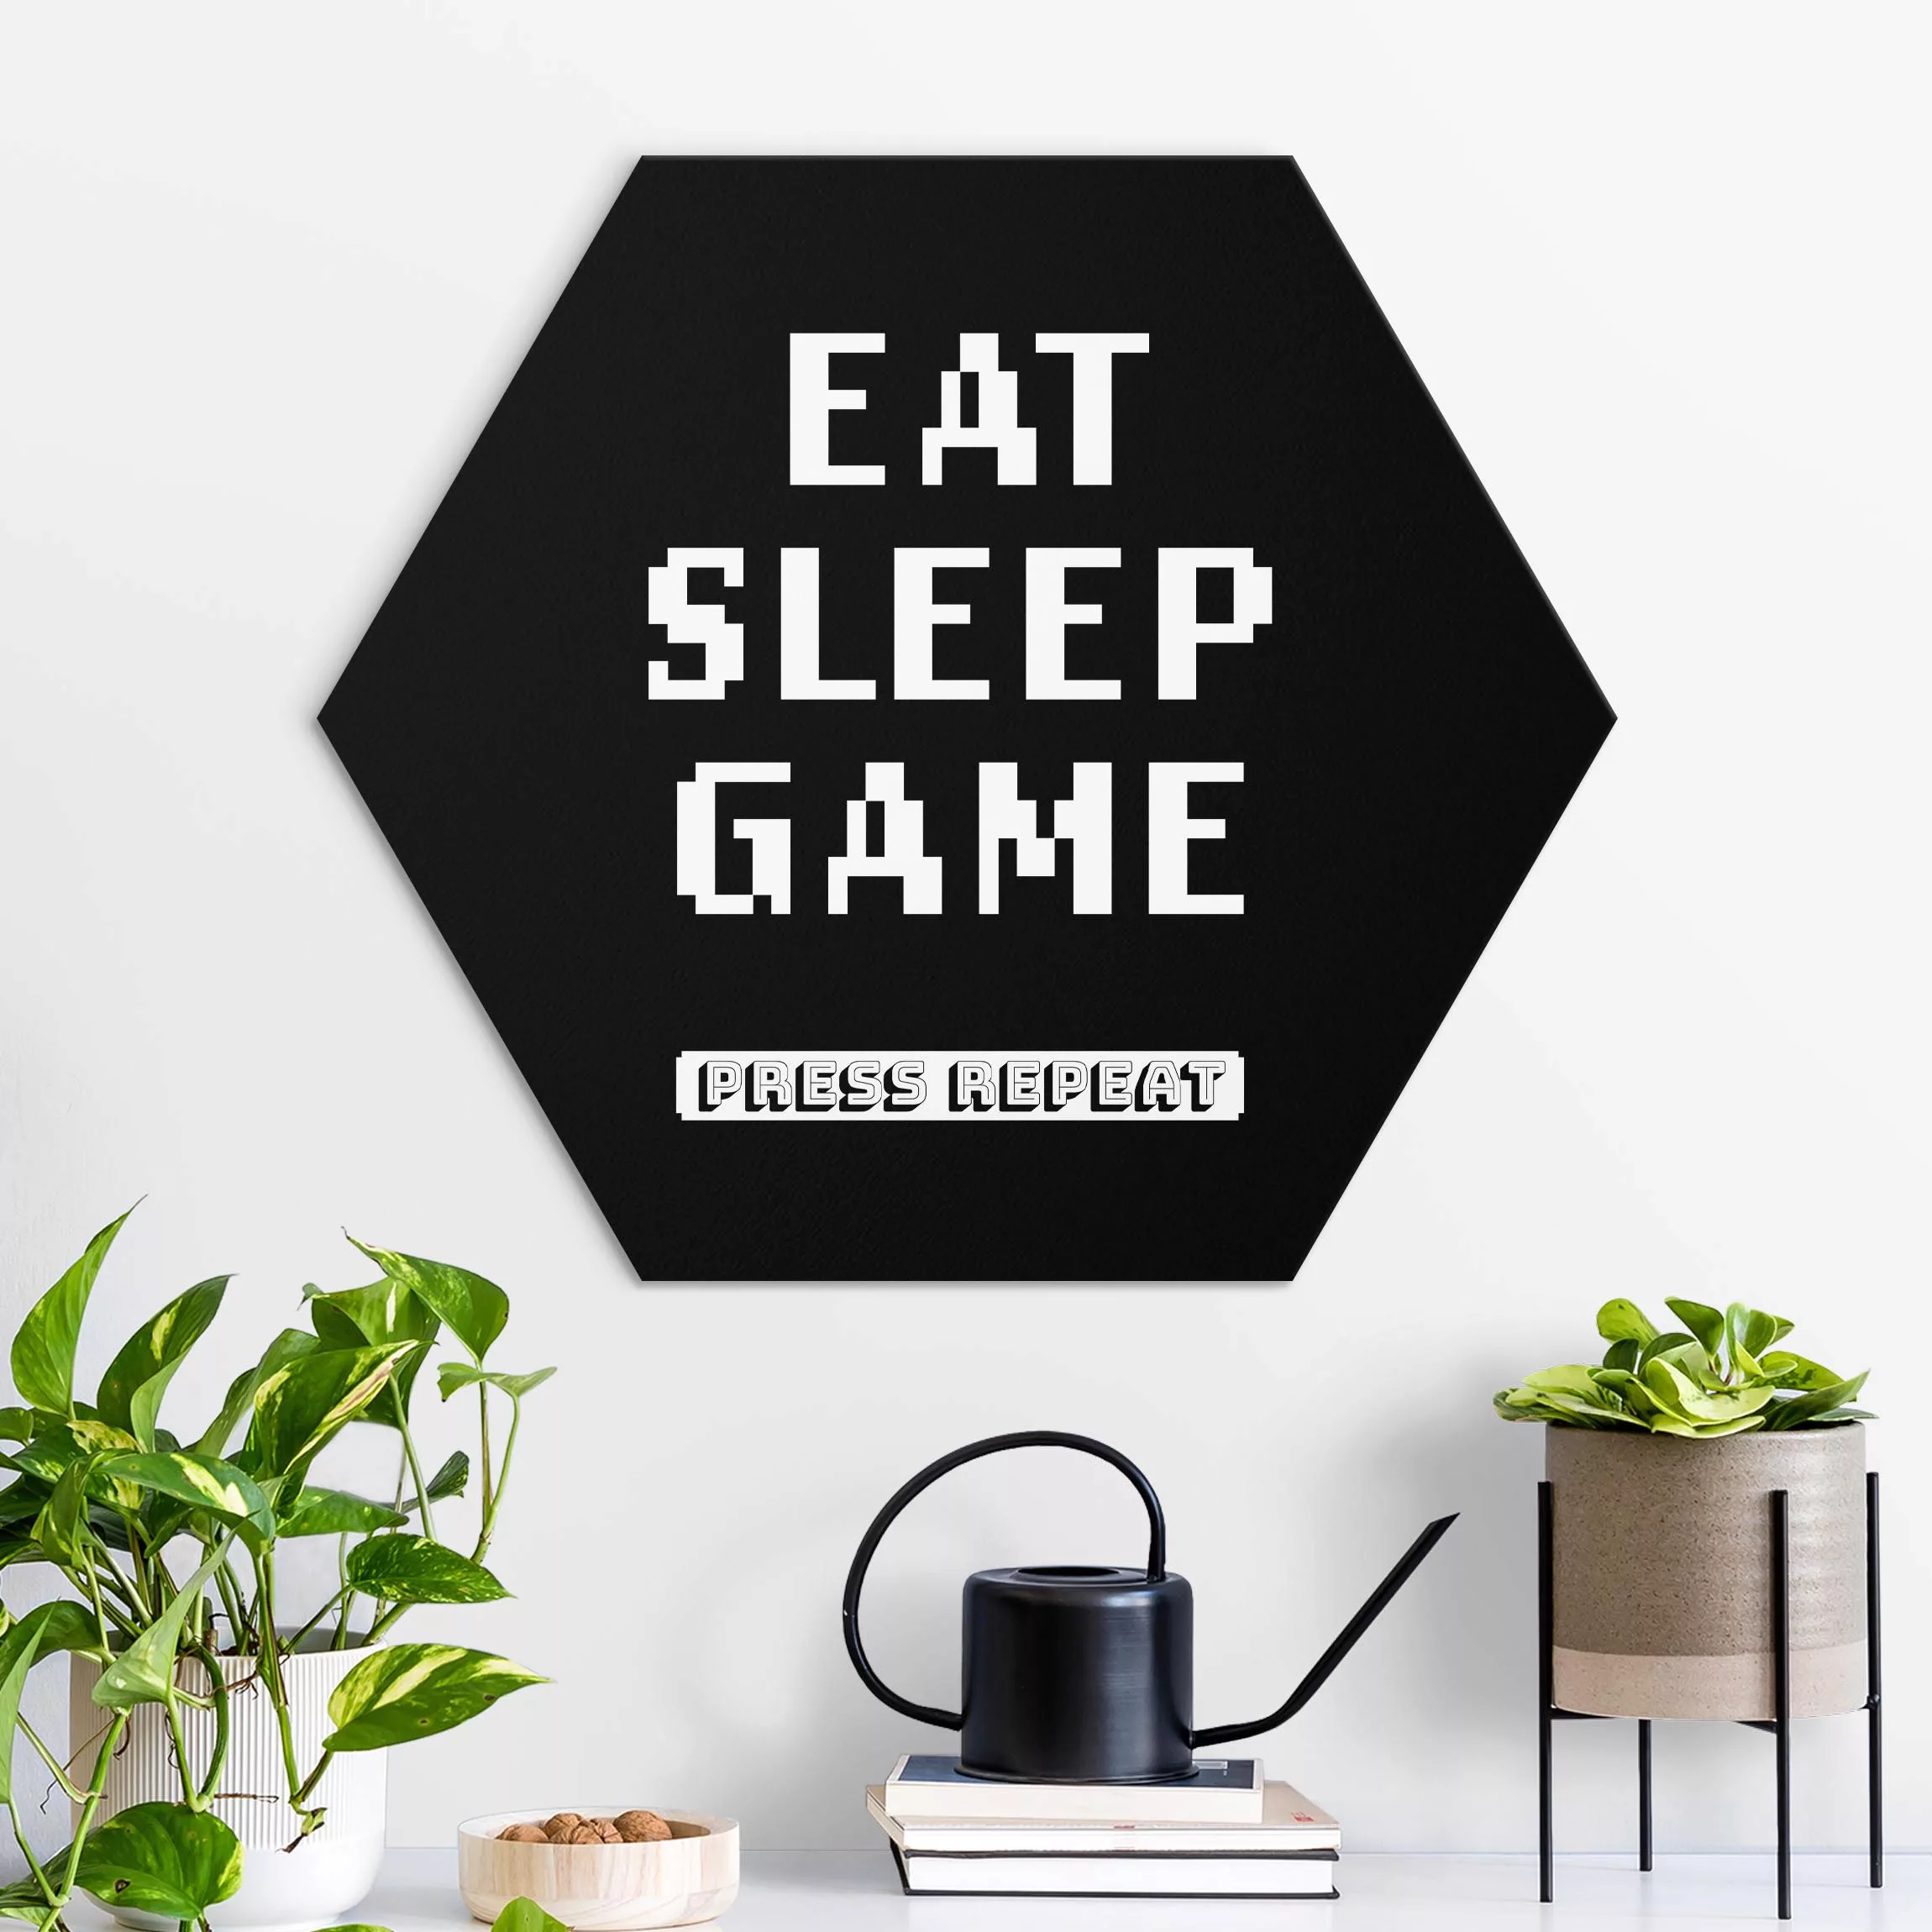 Hexagon-Alu-Dibond Bild Klassik Konsole Eat Sleep Game Press Repeat günstig online kaufen